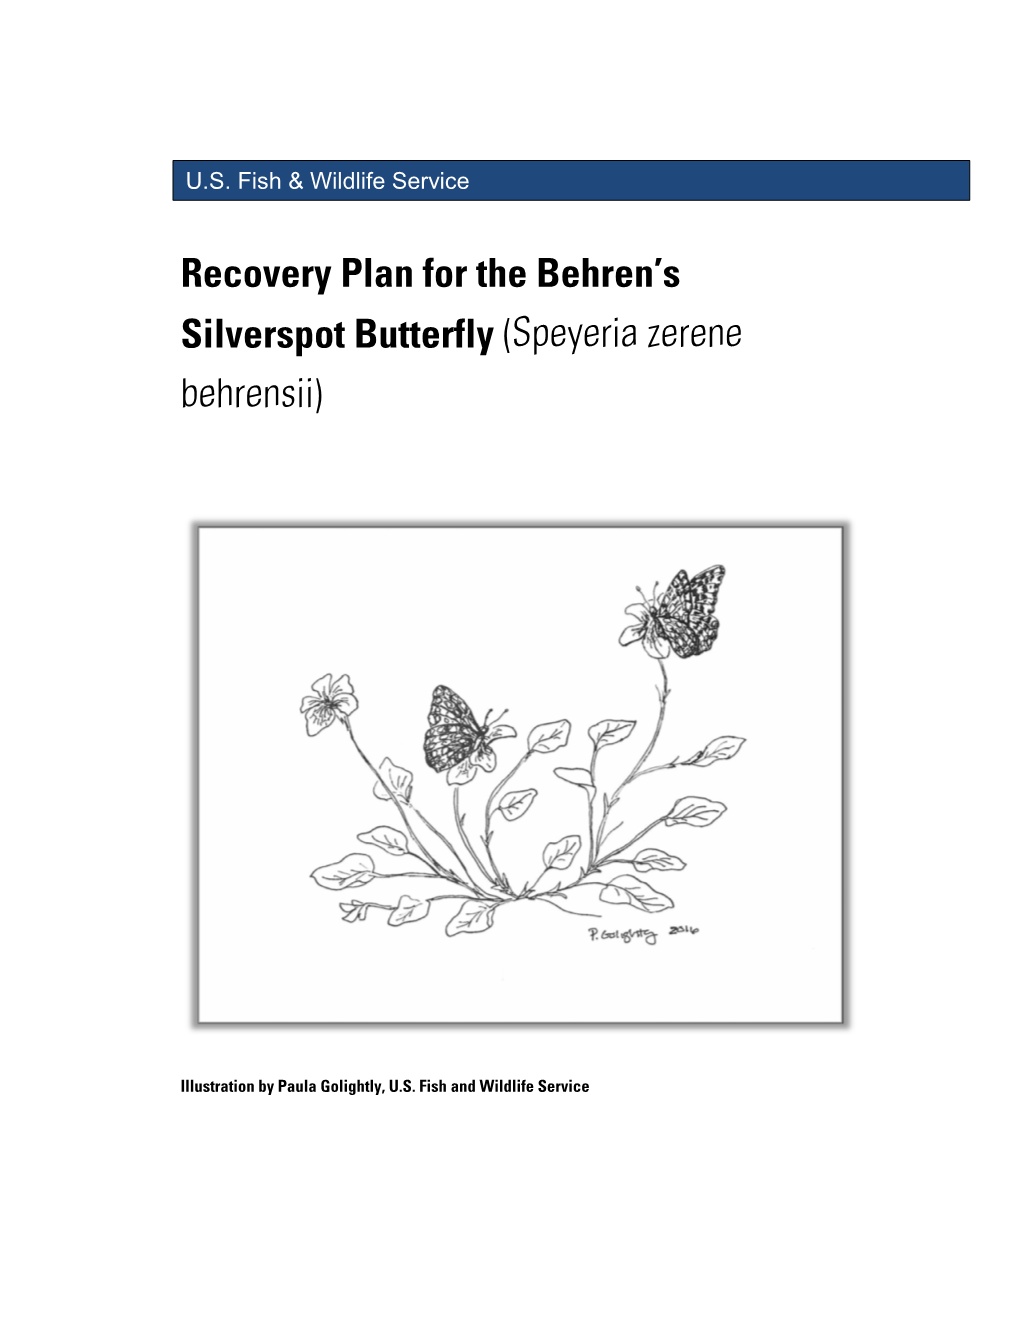 Final Recovery Plan for Behren's Silverspot Butterfly